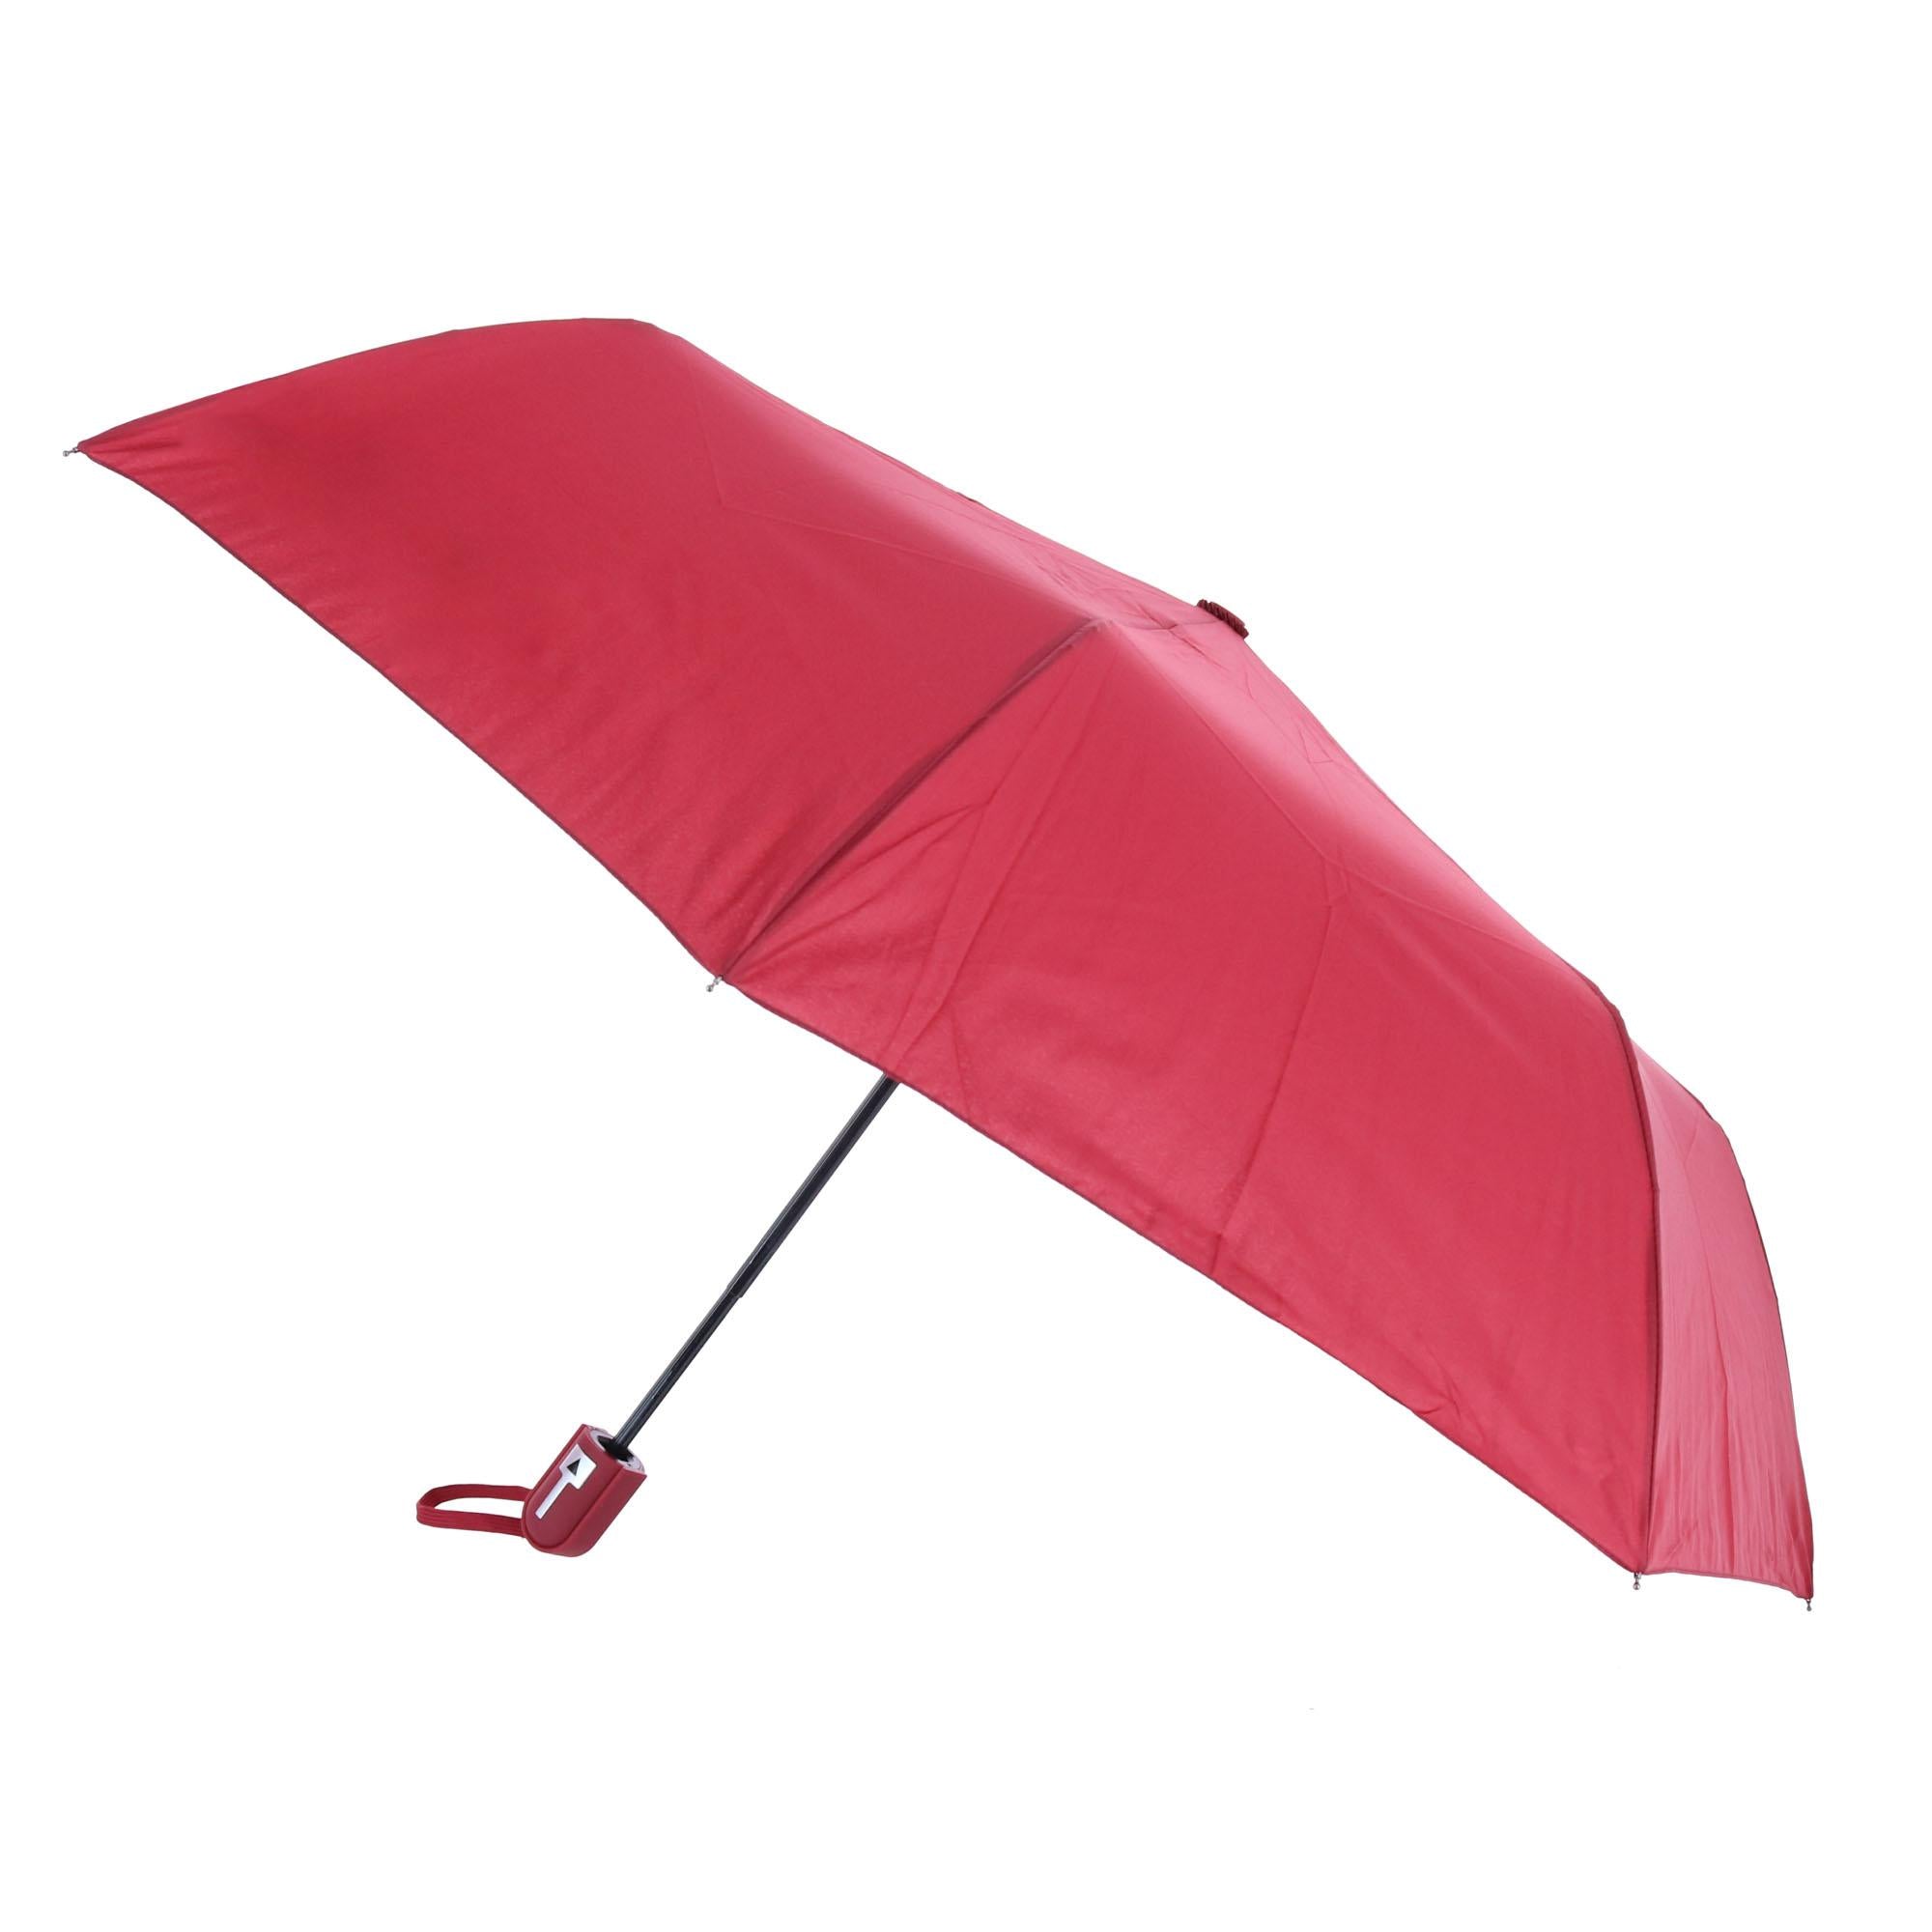 CTM® Solid Color Auto Open Compact Travel Umbrella by Parquet